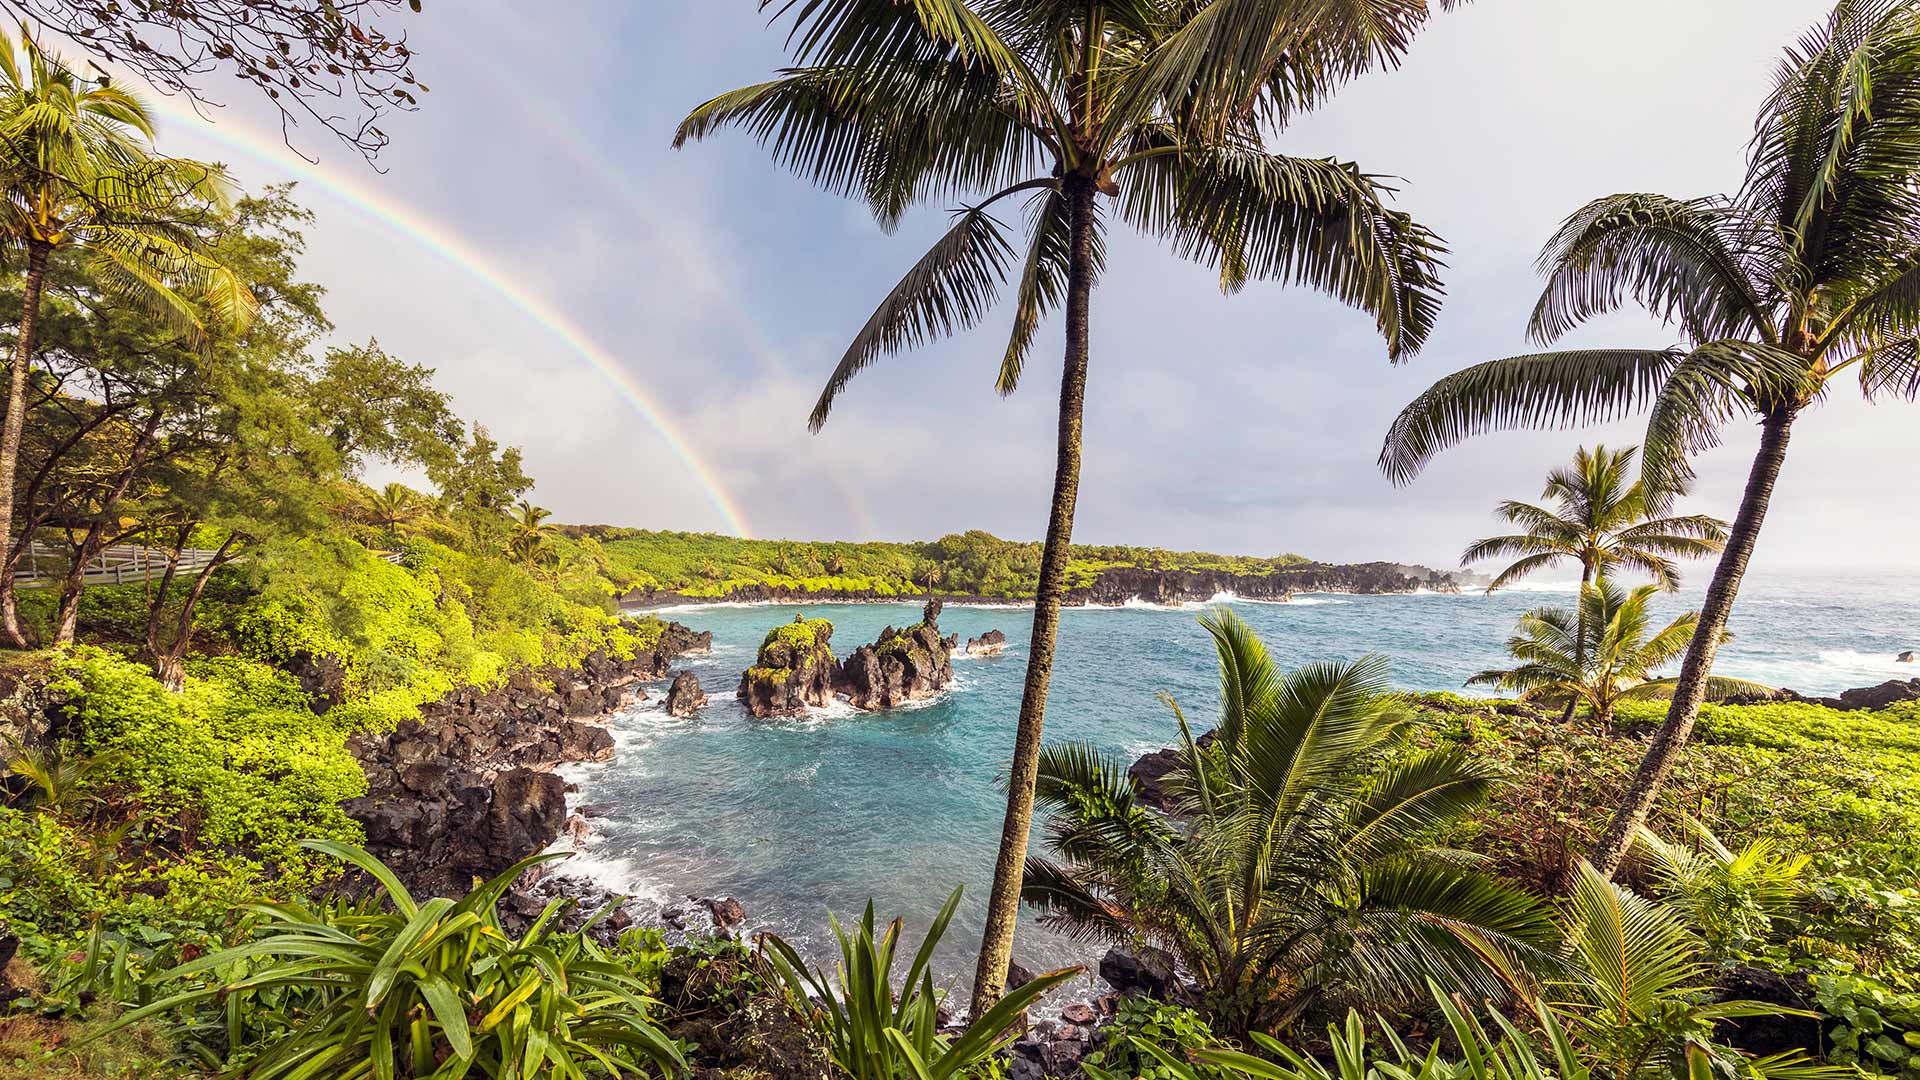 https://traveler.marriott.com/wp-content/uploads/2022/03/coastline-rainbow-maui-hawaii.jpg